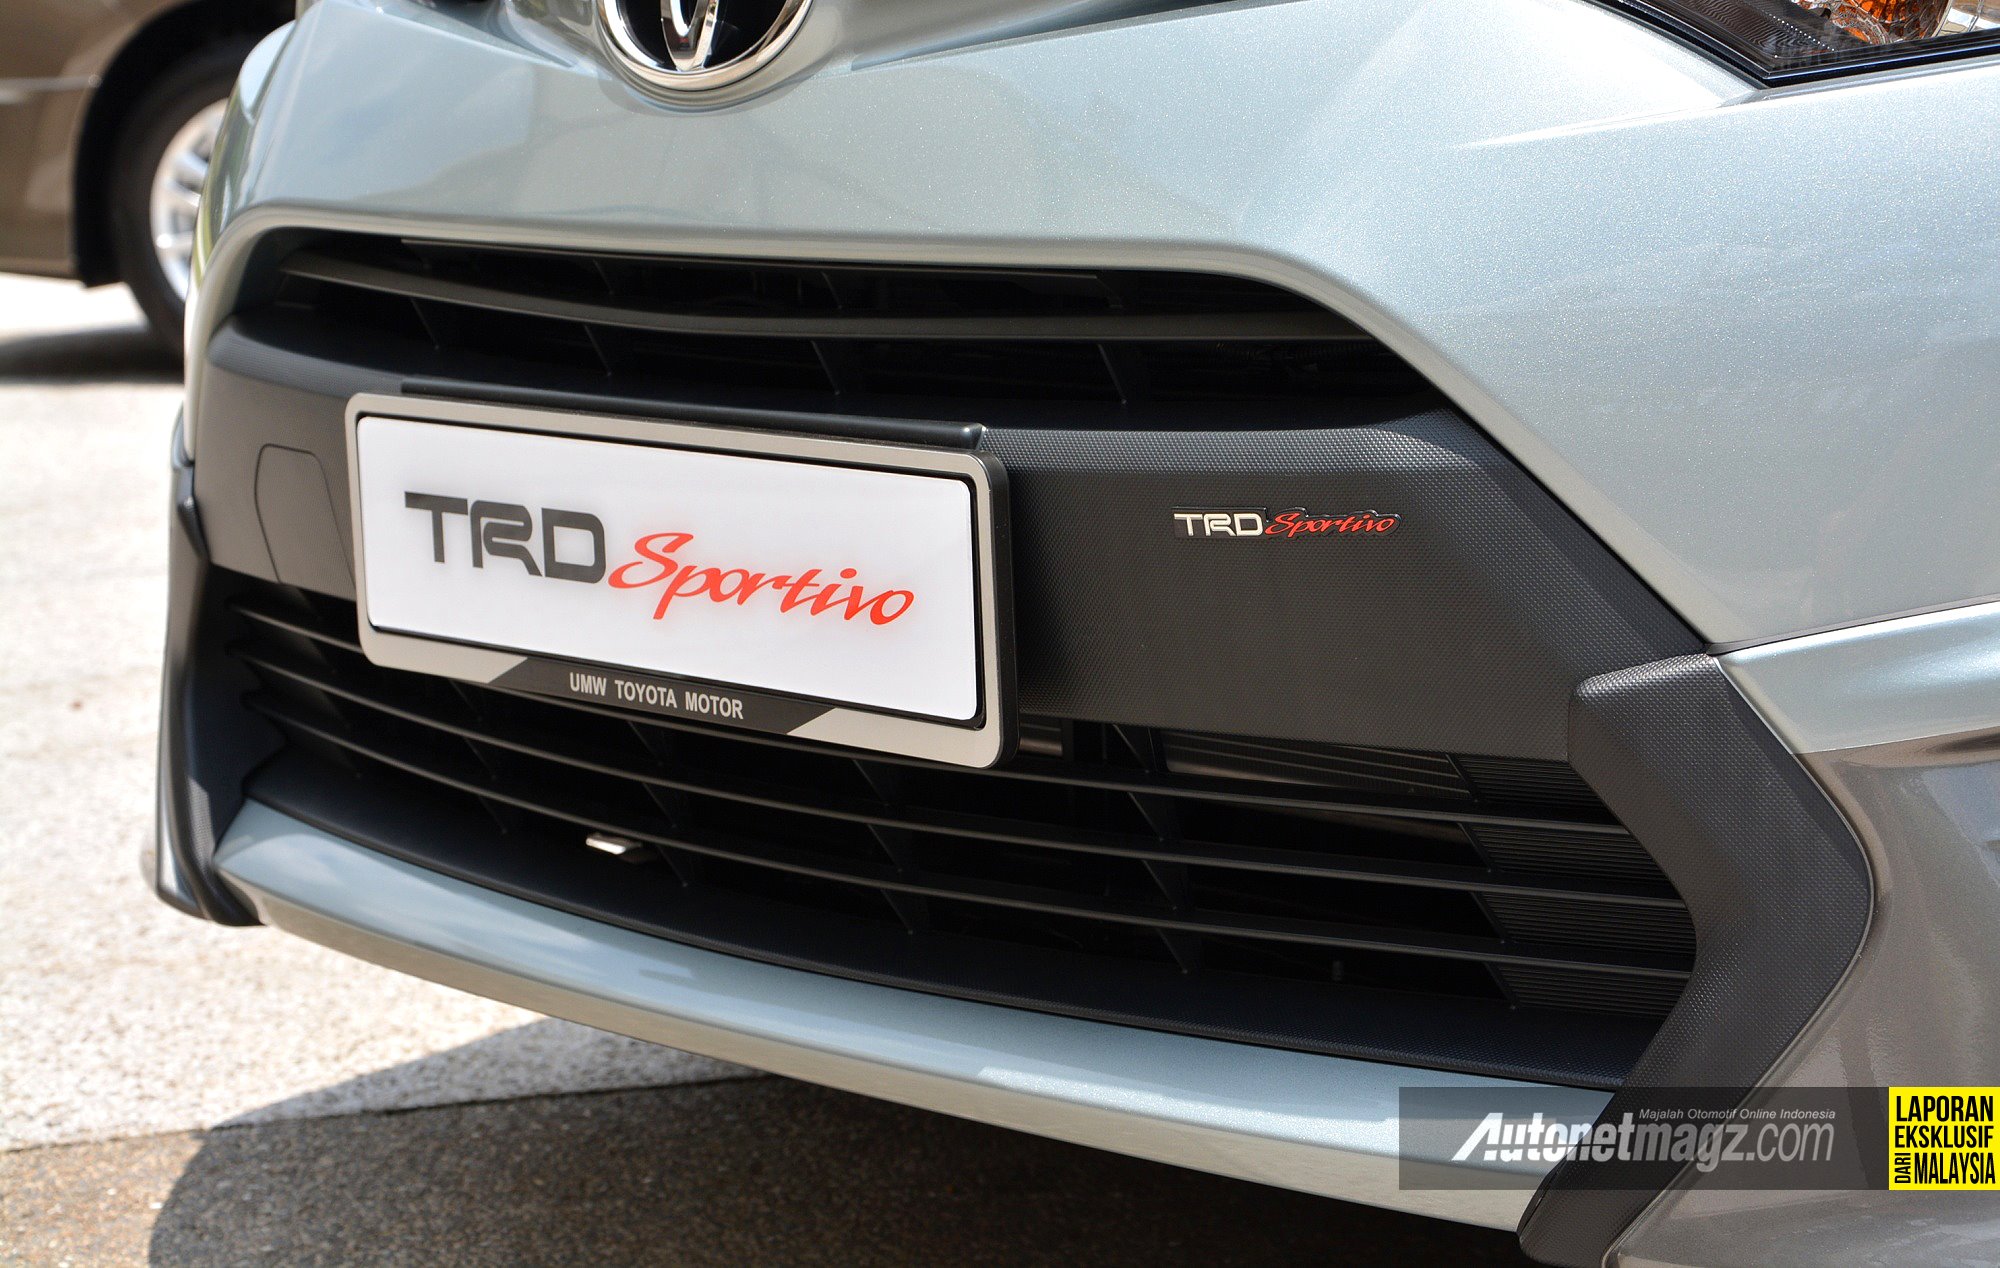 Toyota, Emblem TRD Sportivo pada_bumper depan New Vios: Toyota Vios TRD Sportivo Malah Brojol di Malaysia